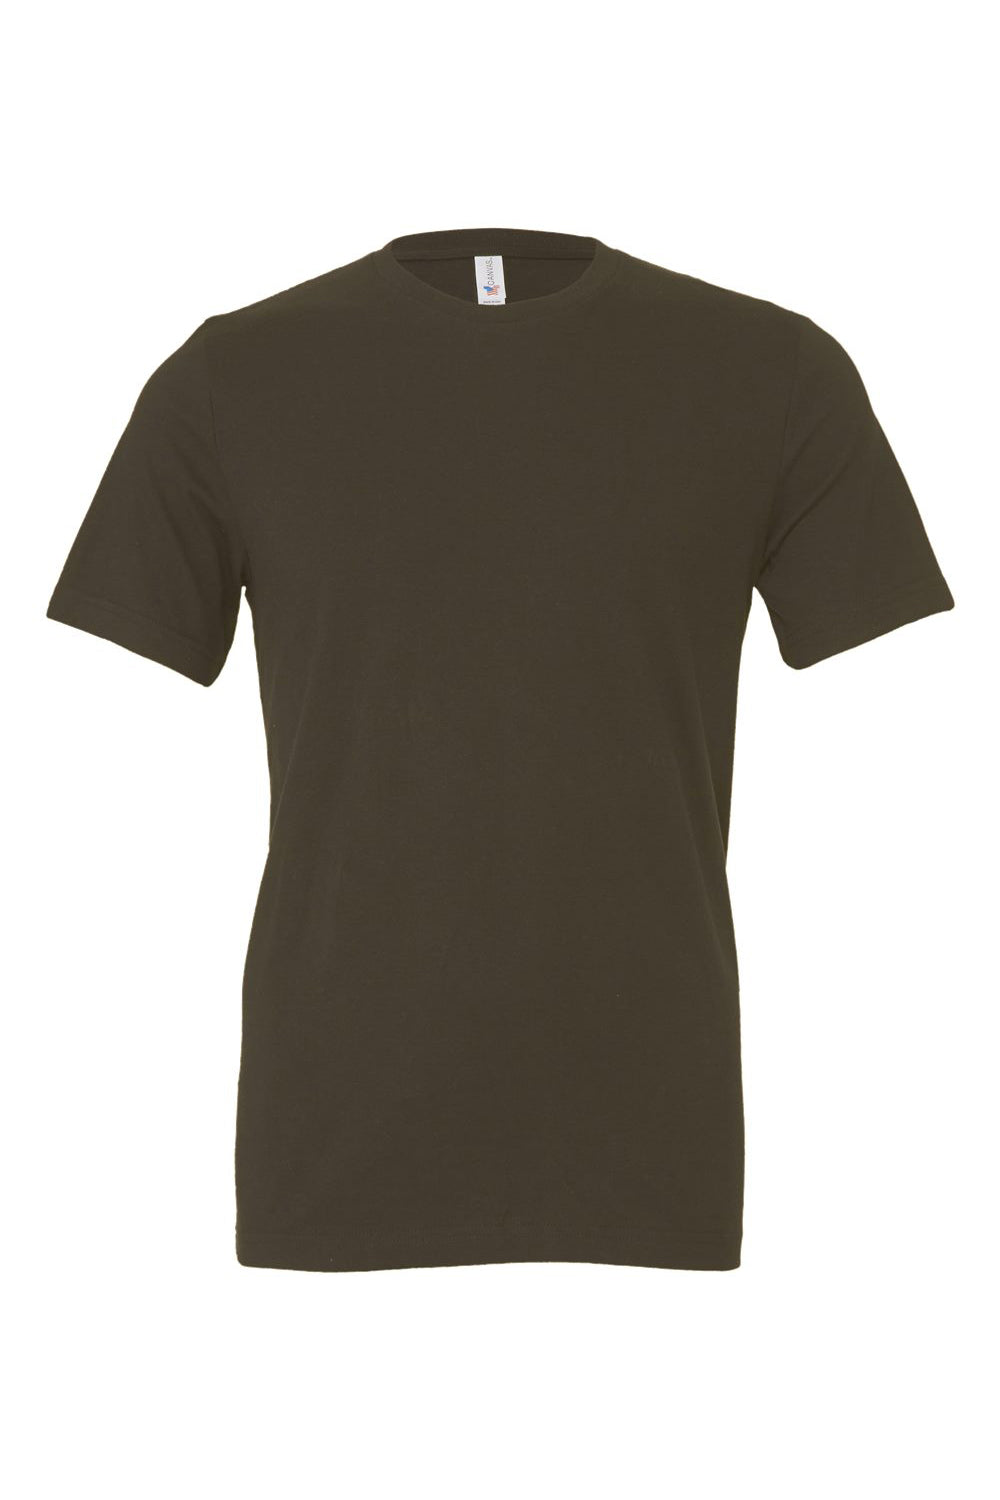 Bella + Canvas BC3001/3001C Mens Jersey Short Sleeve Crewneck T-Shirt Army Green Flat Front